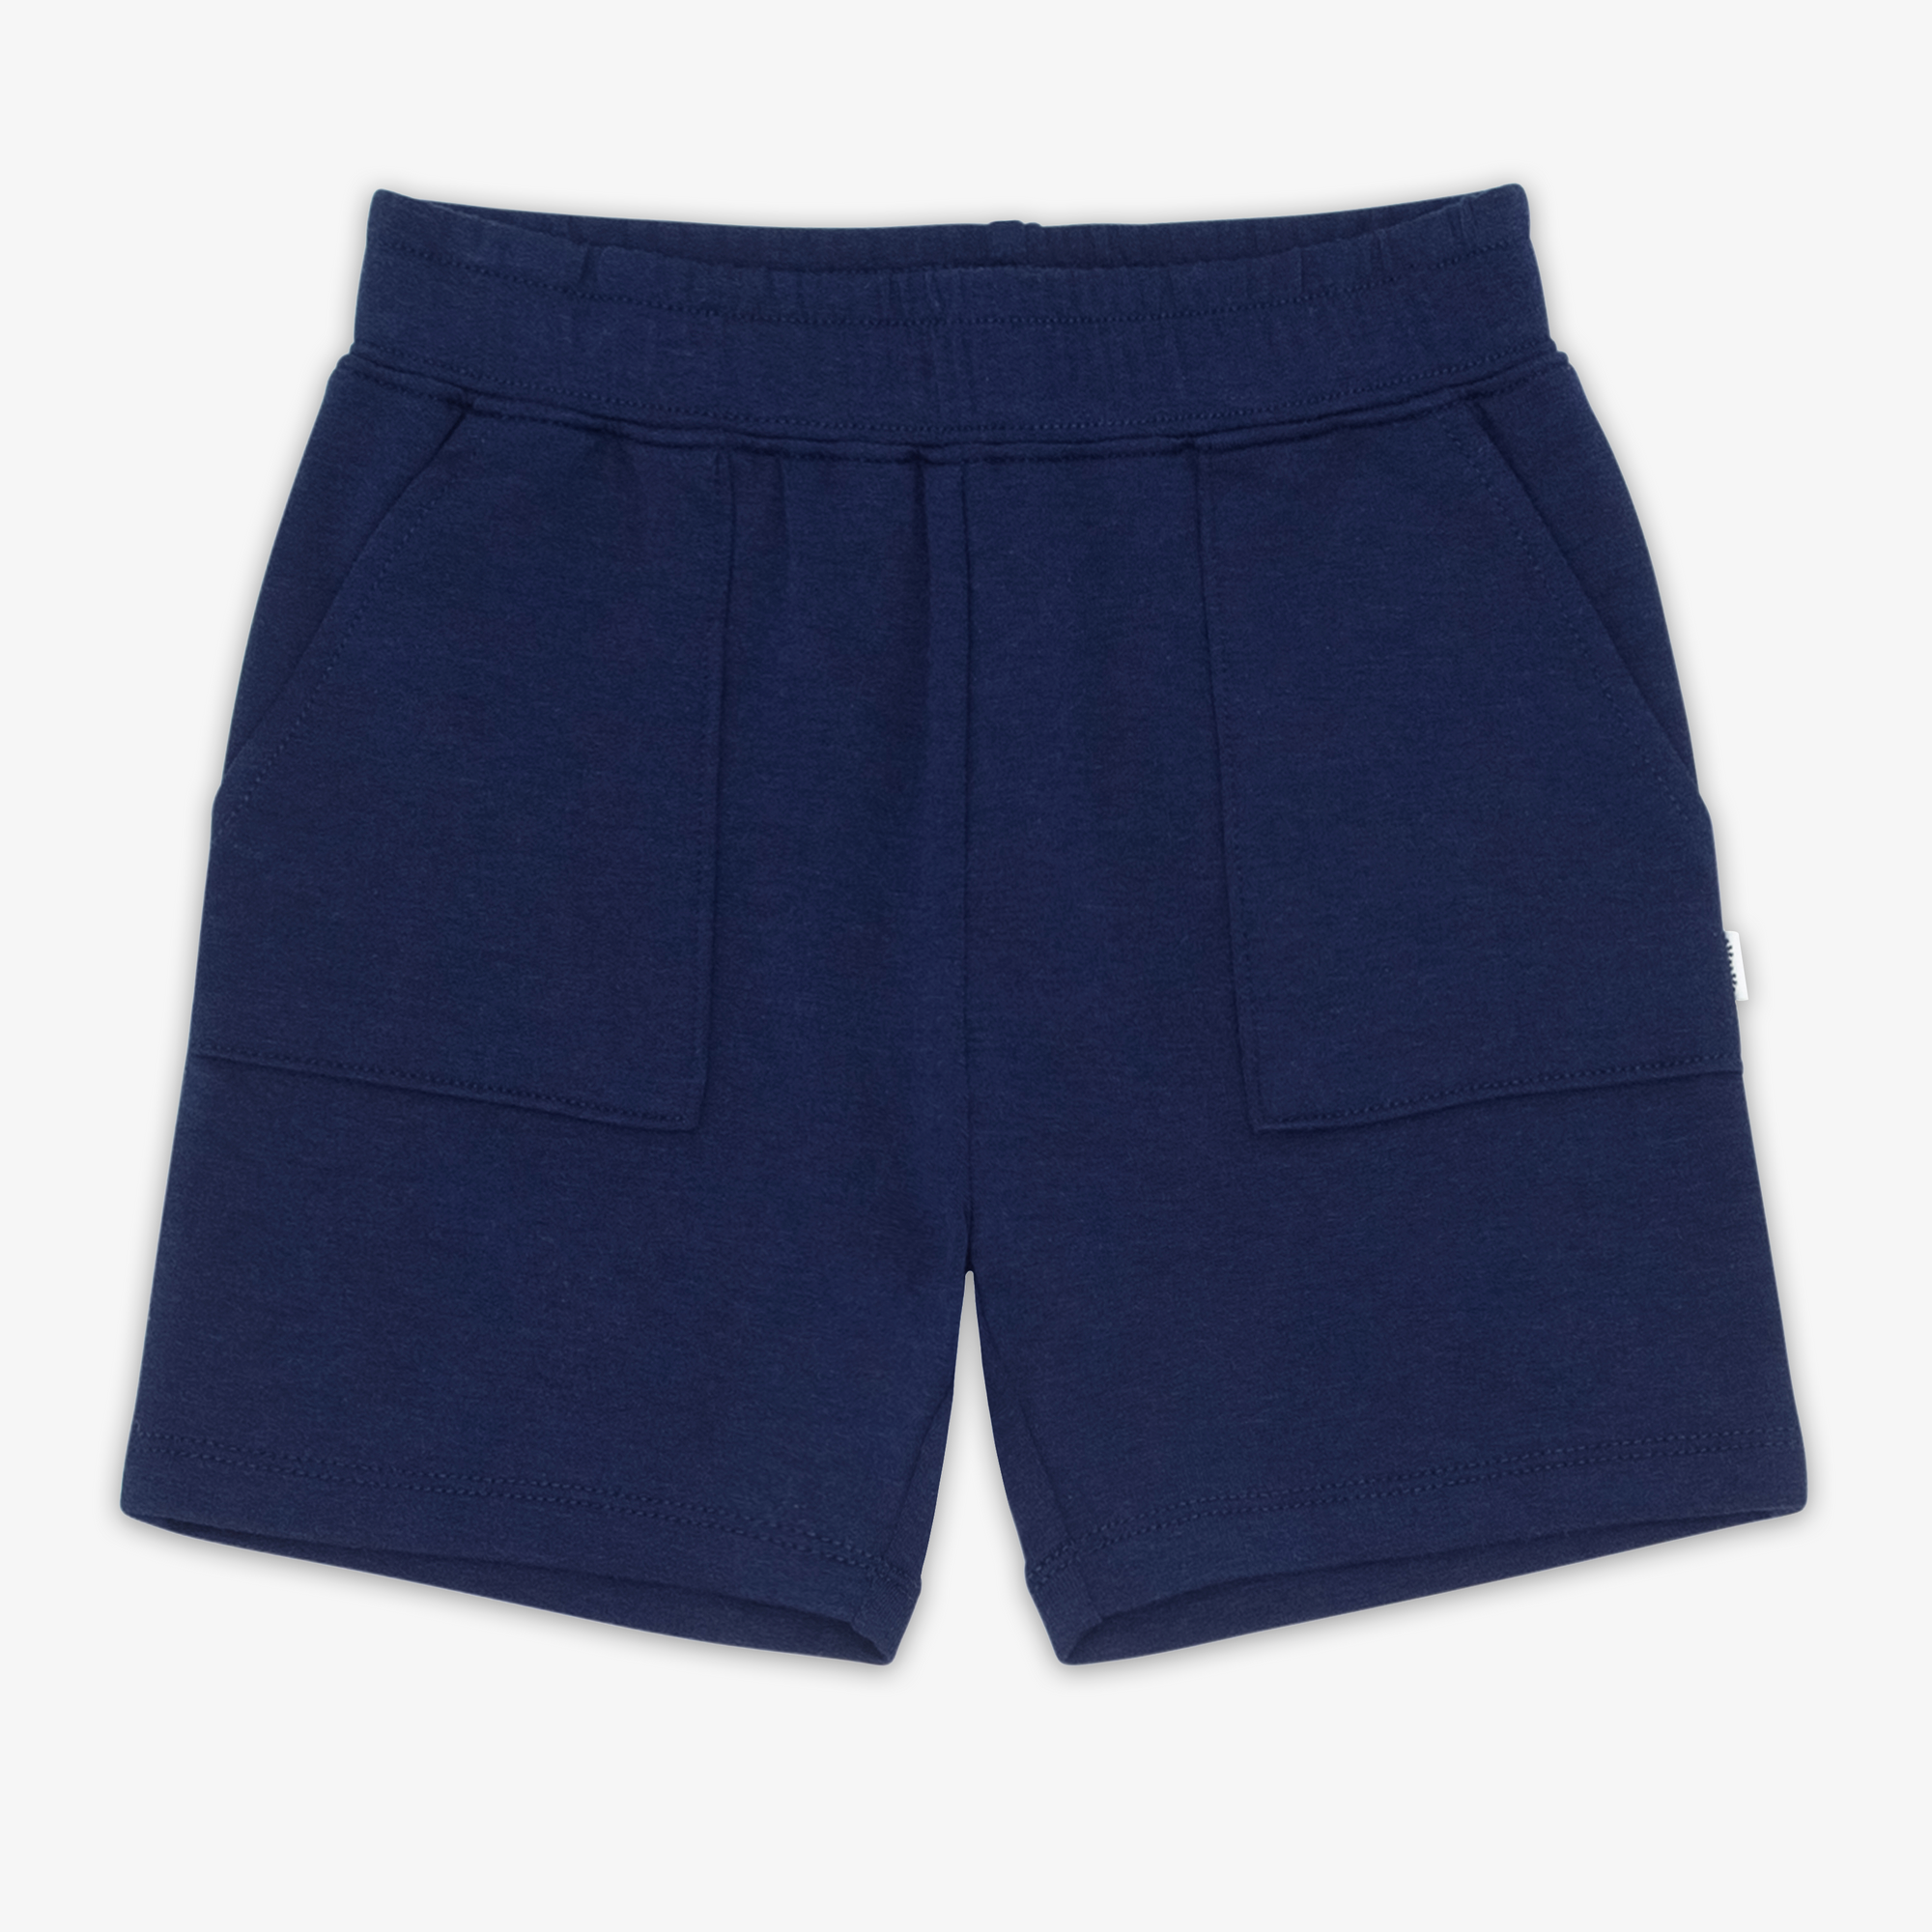 Flat lay image of Classic Navy shorts